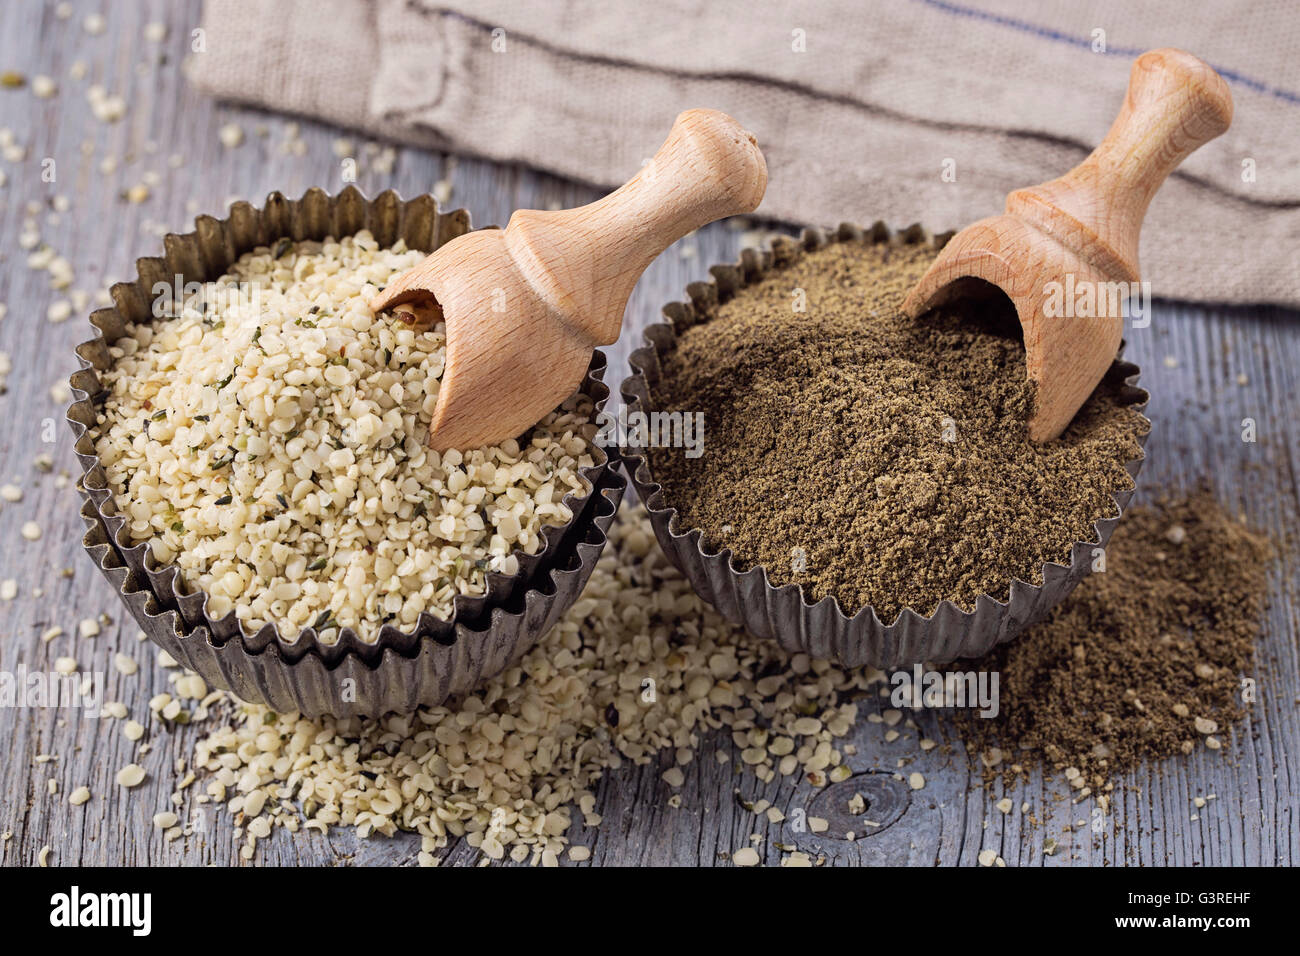 Gluten free hemp flour and seeds Stock Photo